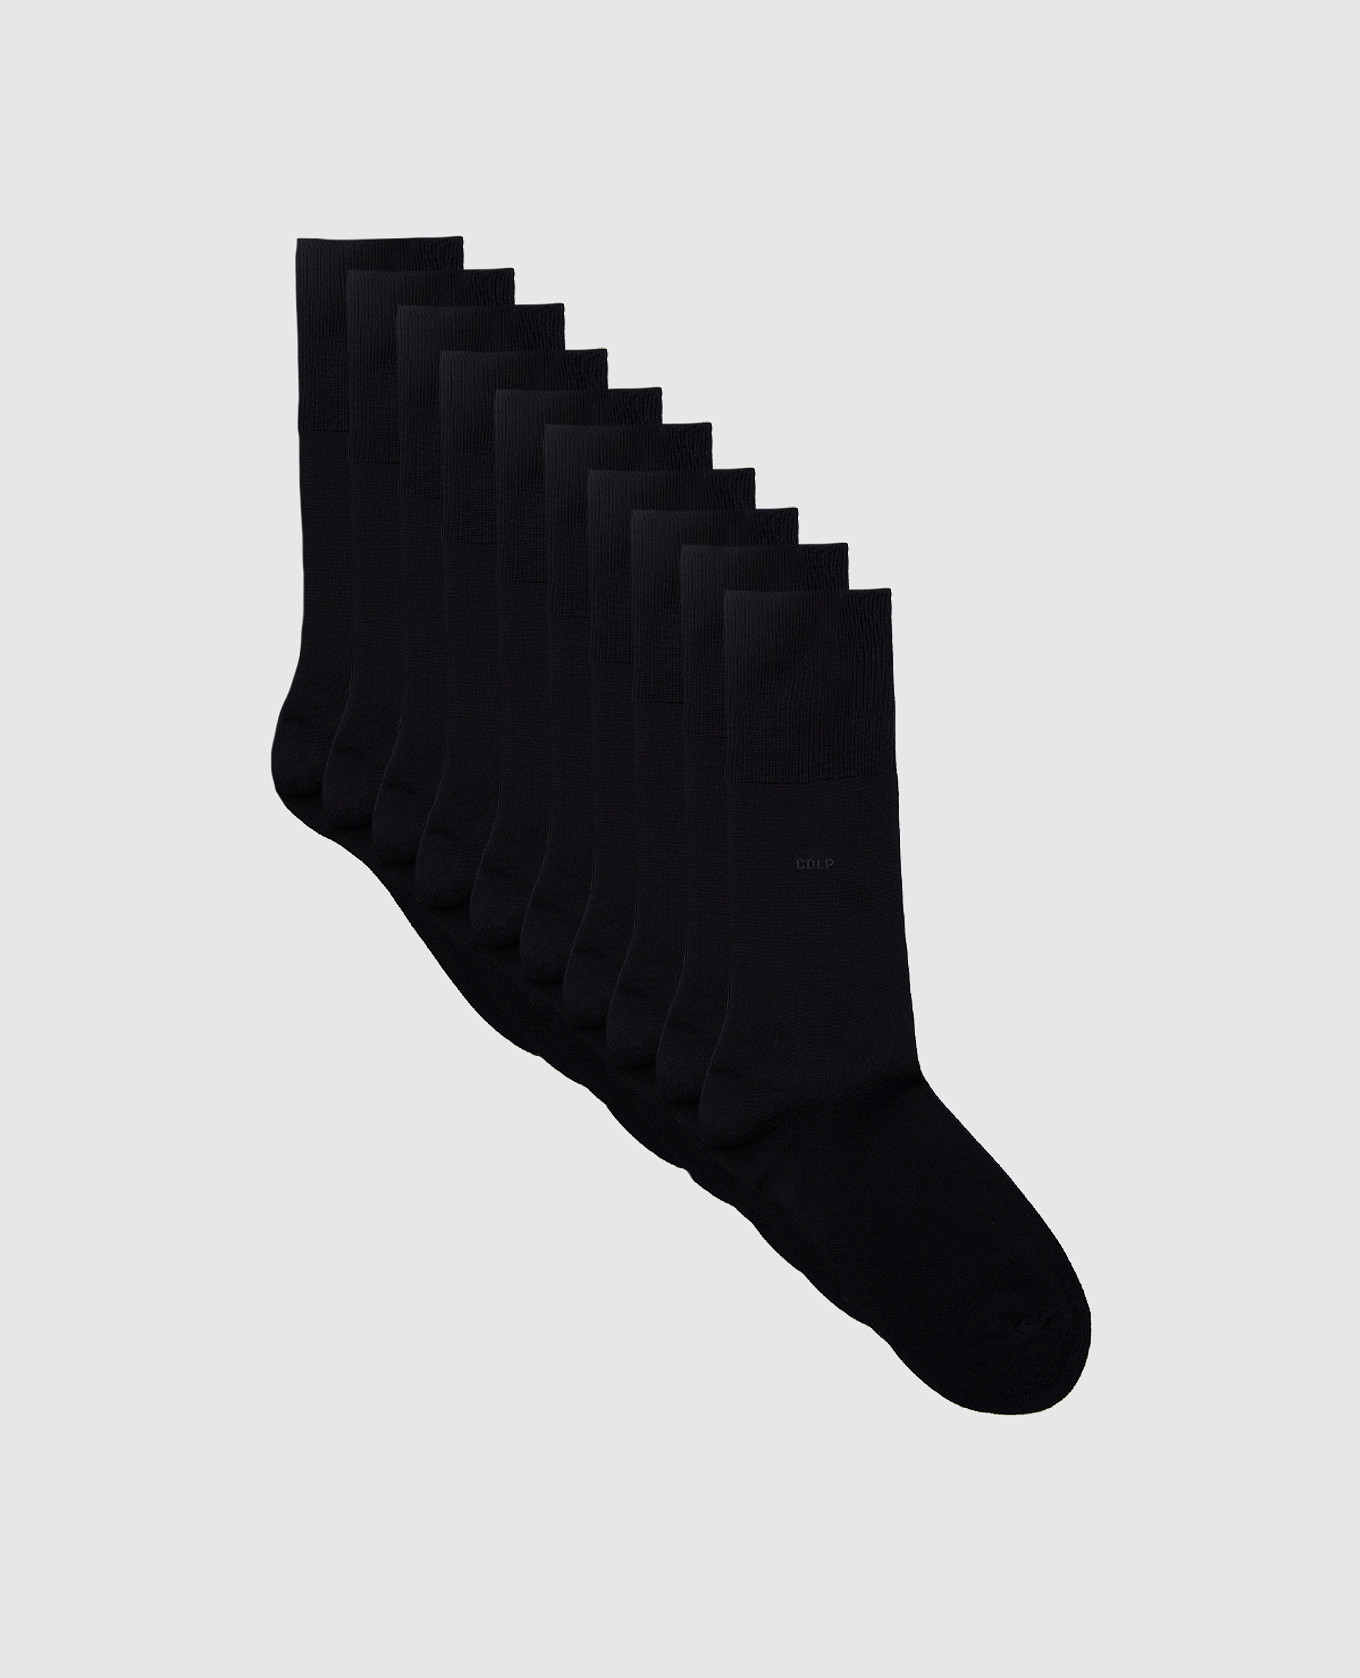 Набор синих носков с логотипом узором.